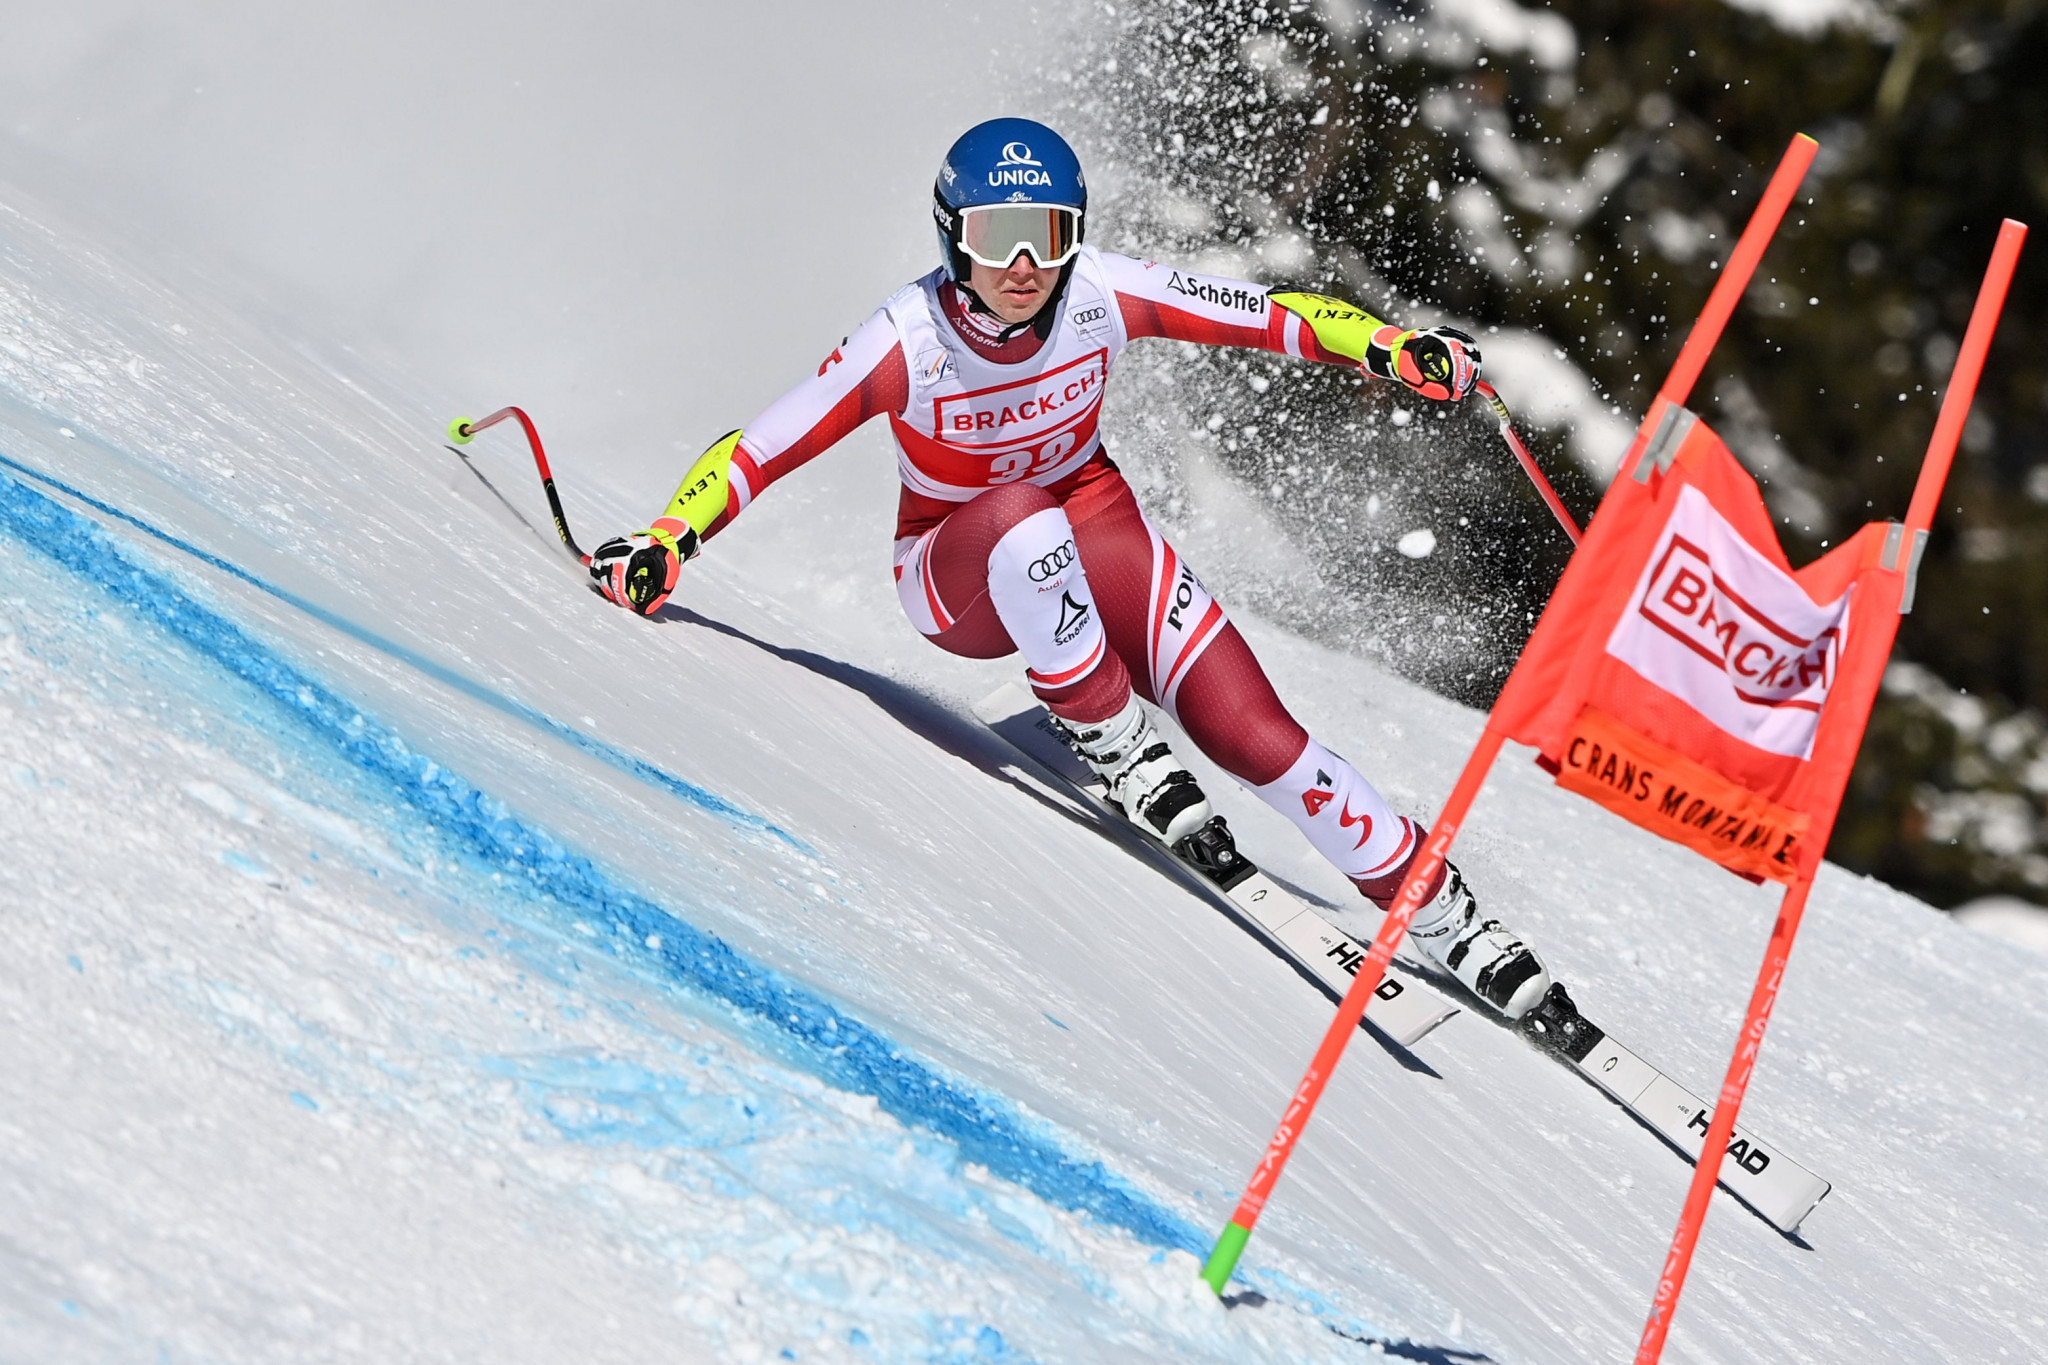 Crans-Montana to host 2027 Alpine World Ski Championships